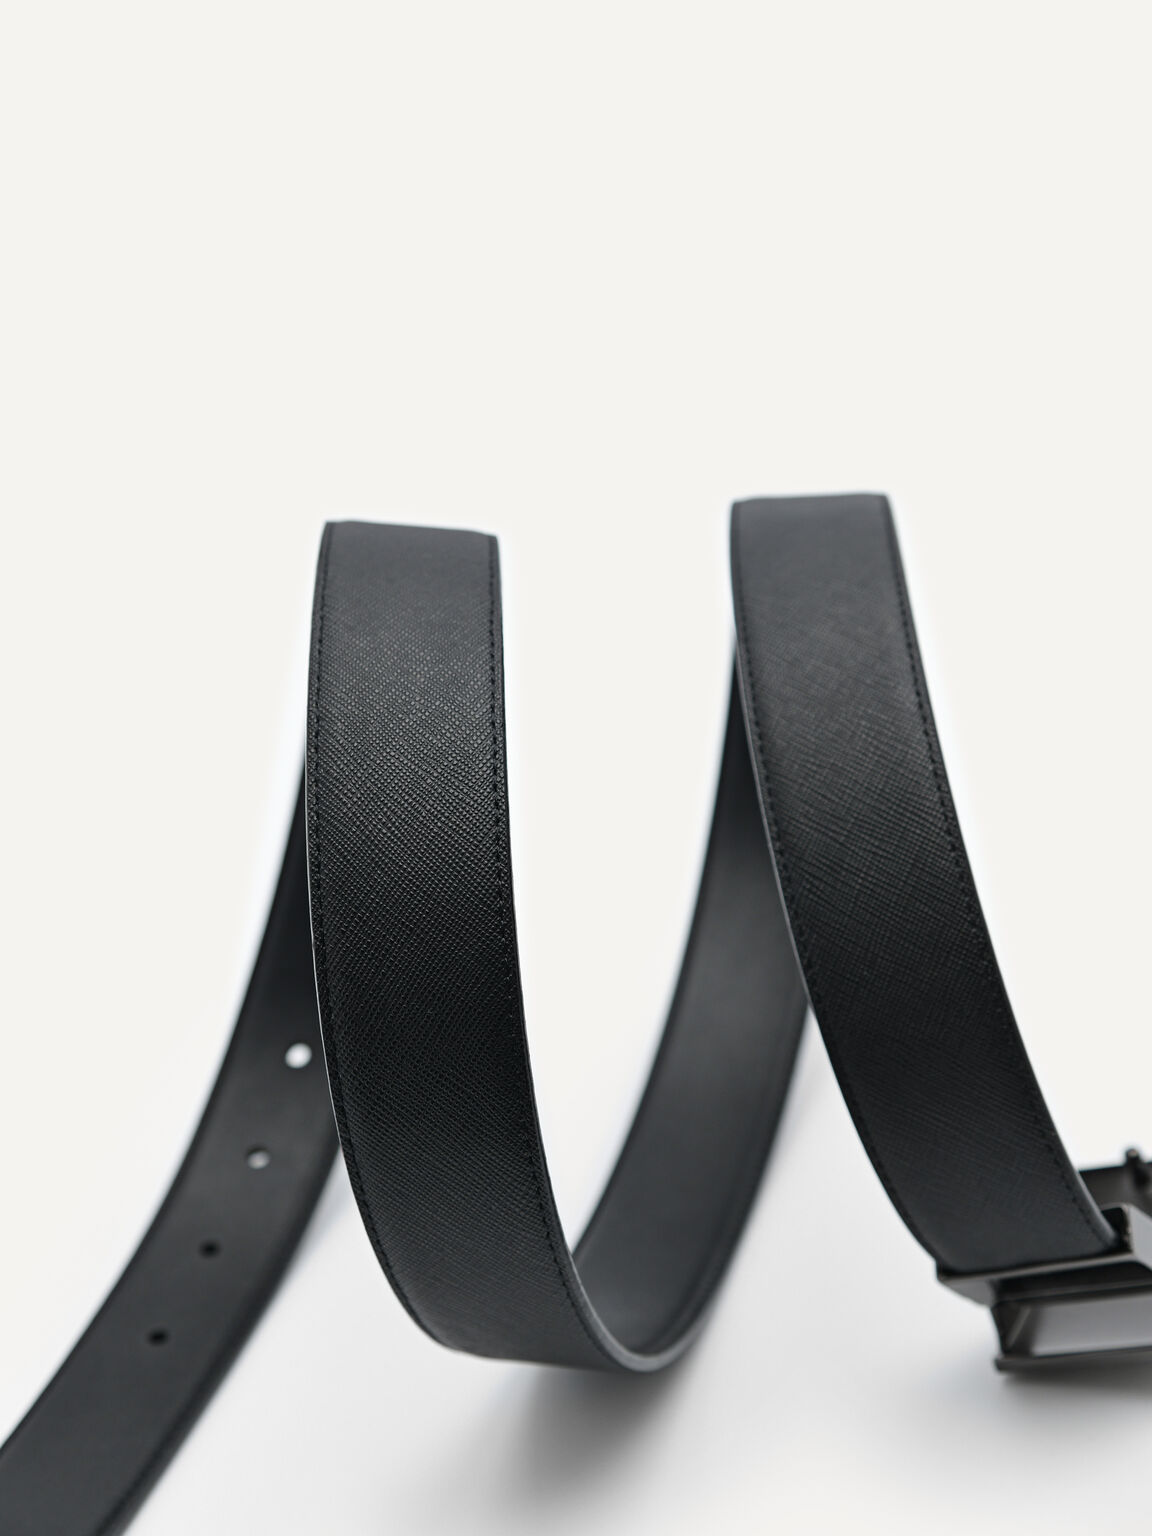 Embossed Leather Reversible Tang Belt, Black